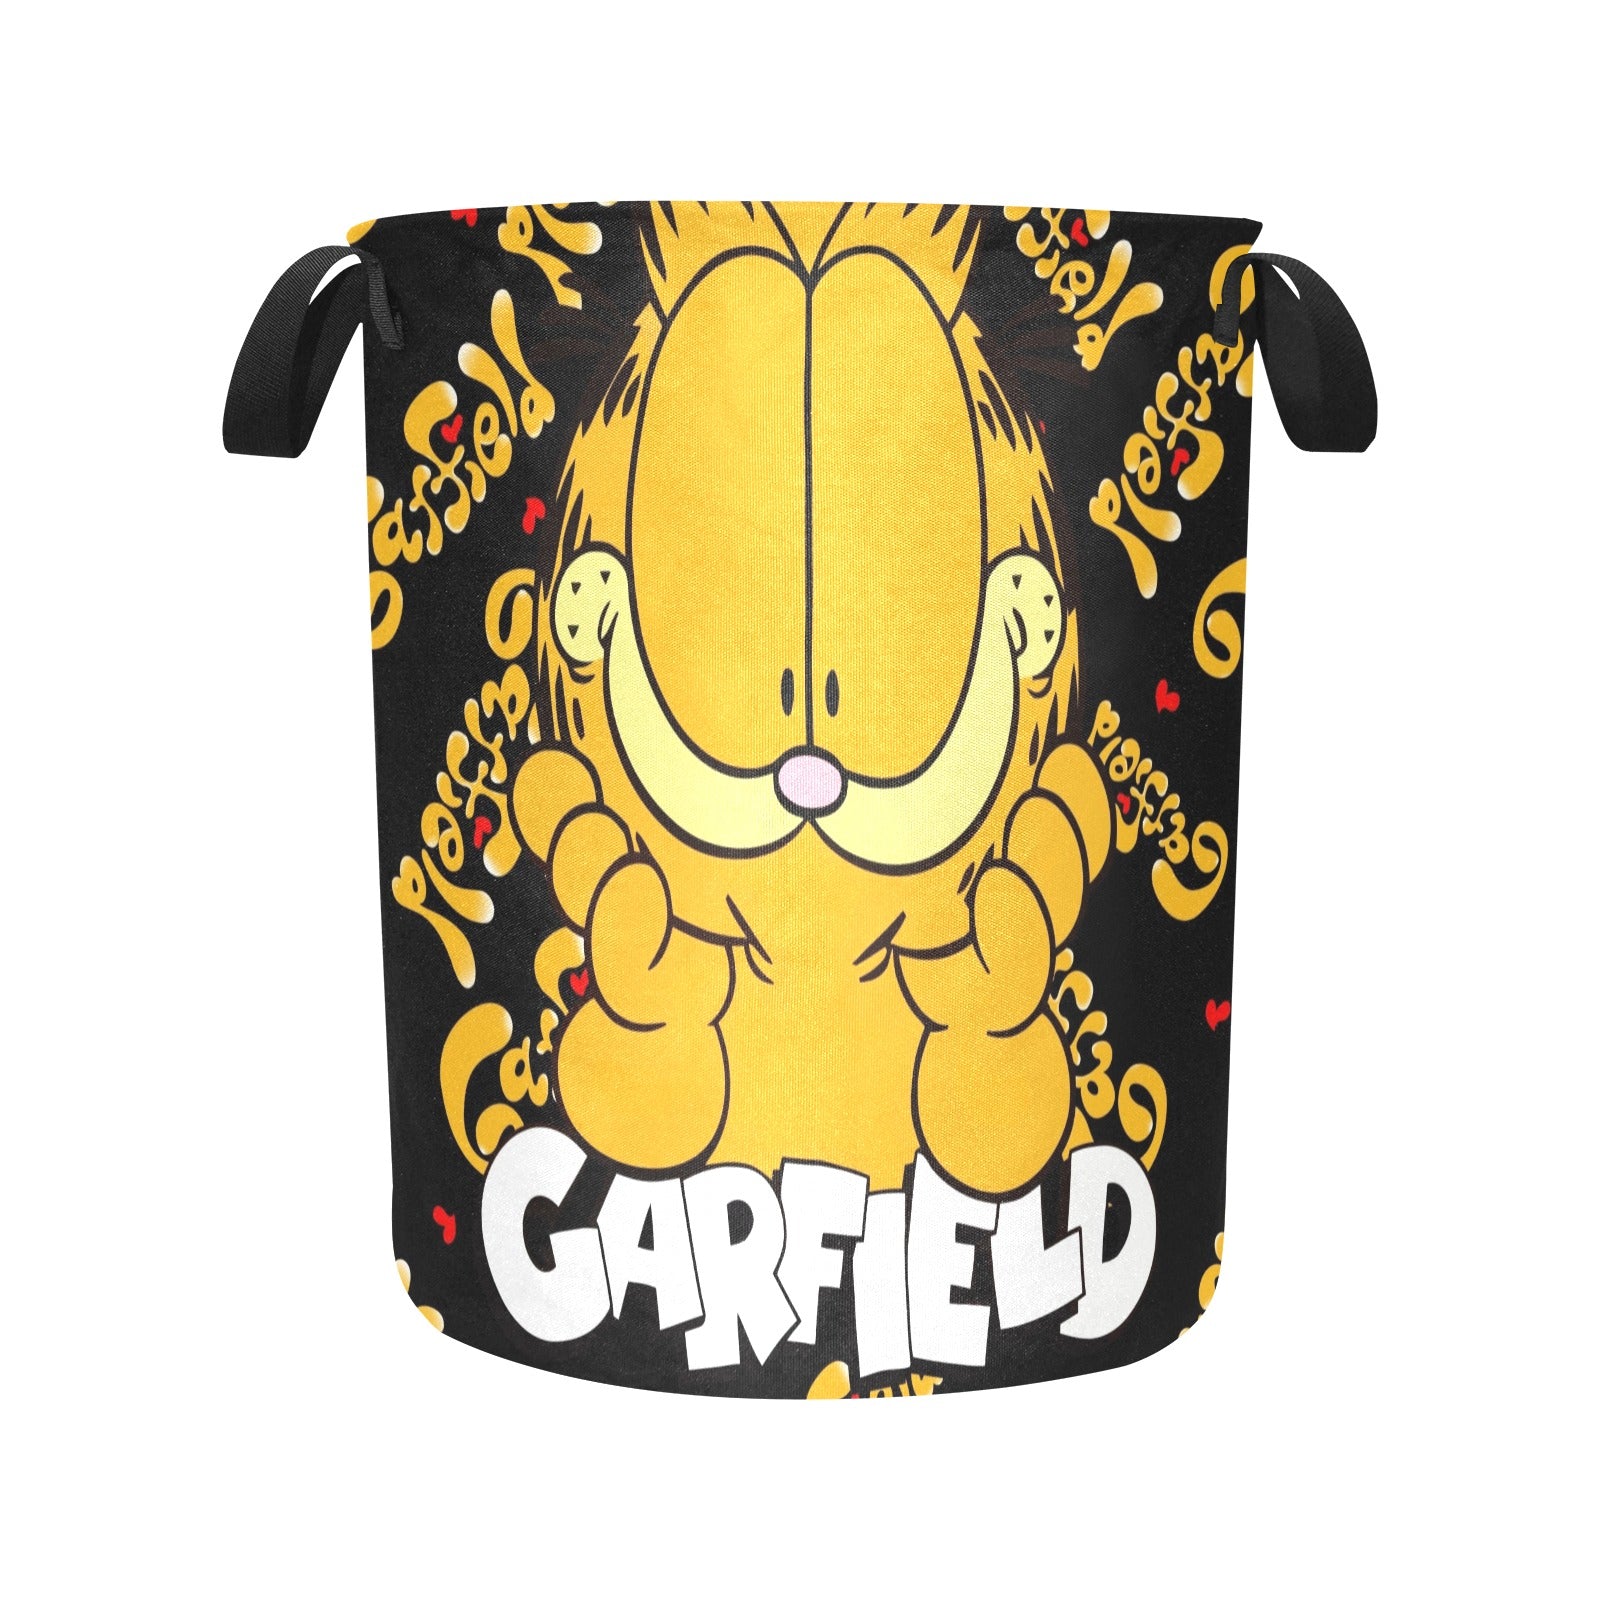 Garfield 3 Laundry Bag - Laundry Bag (Large) - Zanlana Design and Home Decor